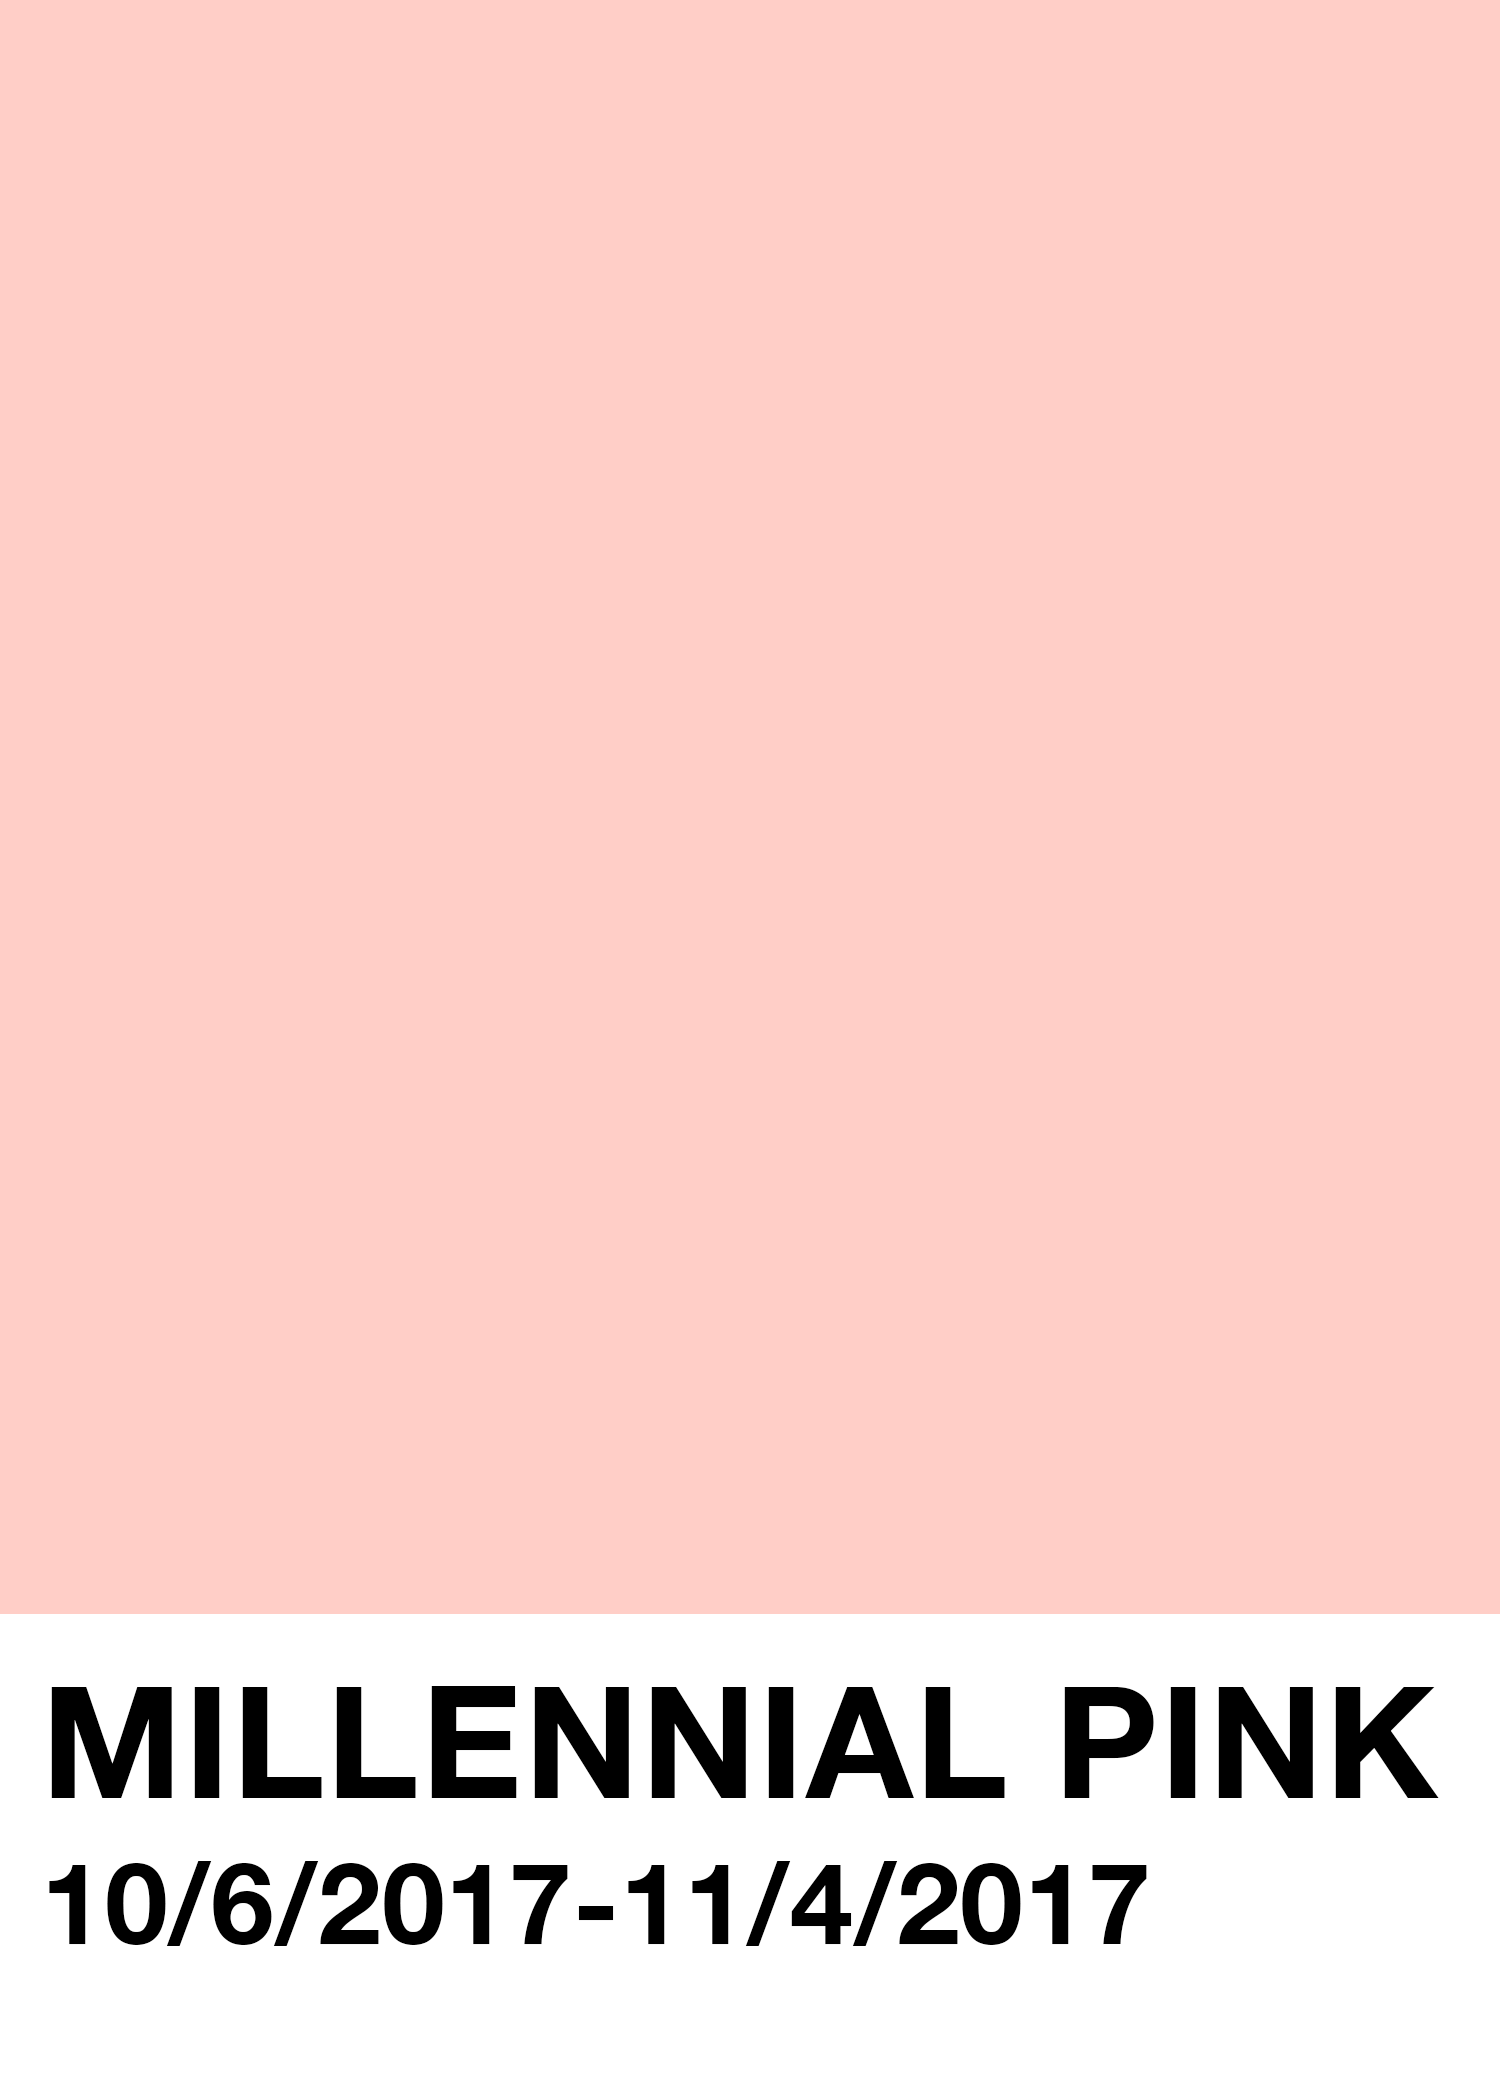 Millennial Pink Exhibition 117 Gallery